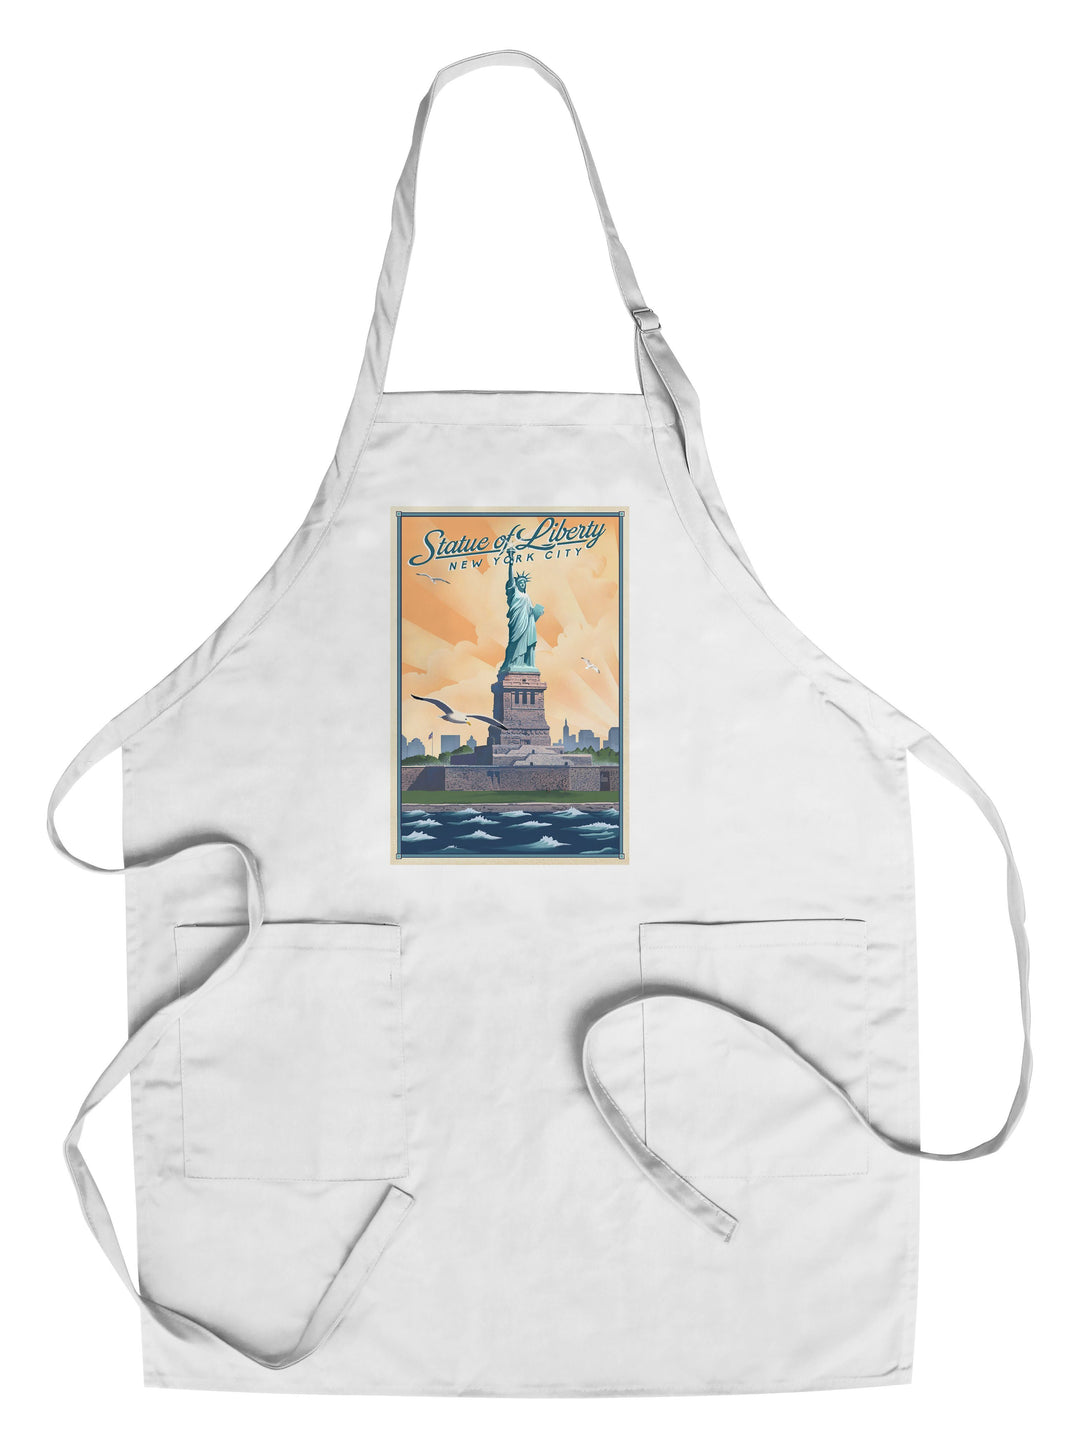 New York, New York, Statue of Liberty, Litho, Lantern Press Artwork, Towels and Aprons Kitchen Lantern Press Chef's Apron 